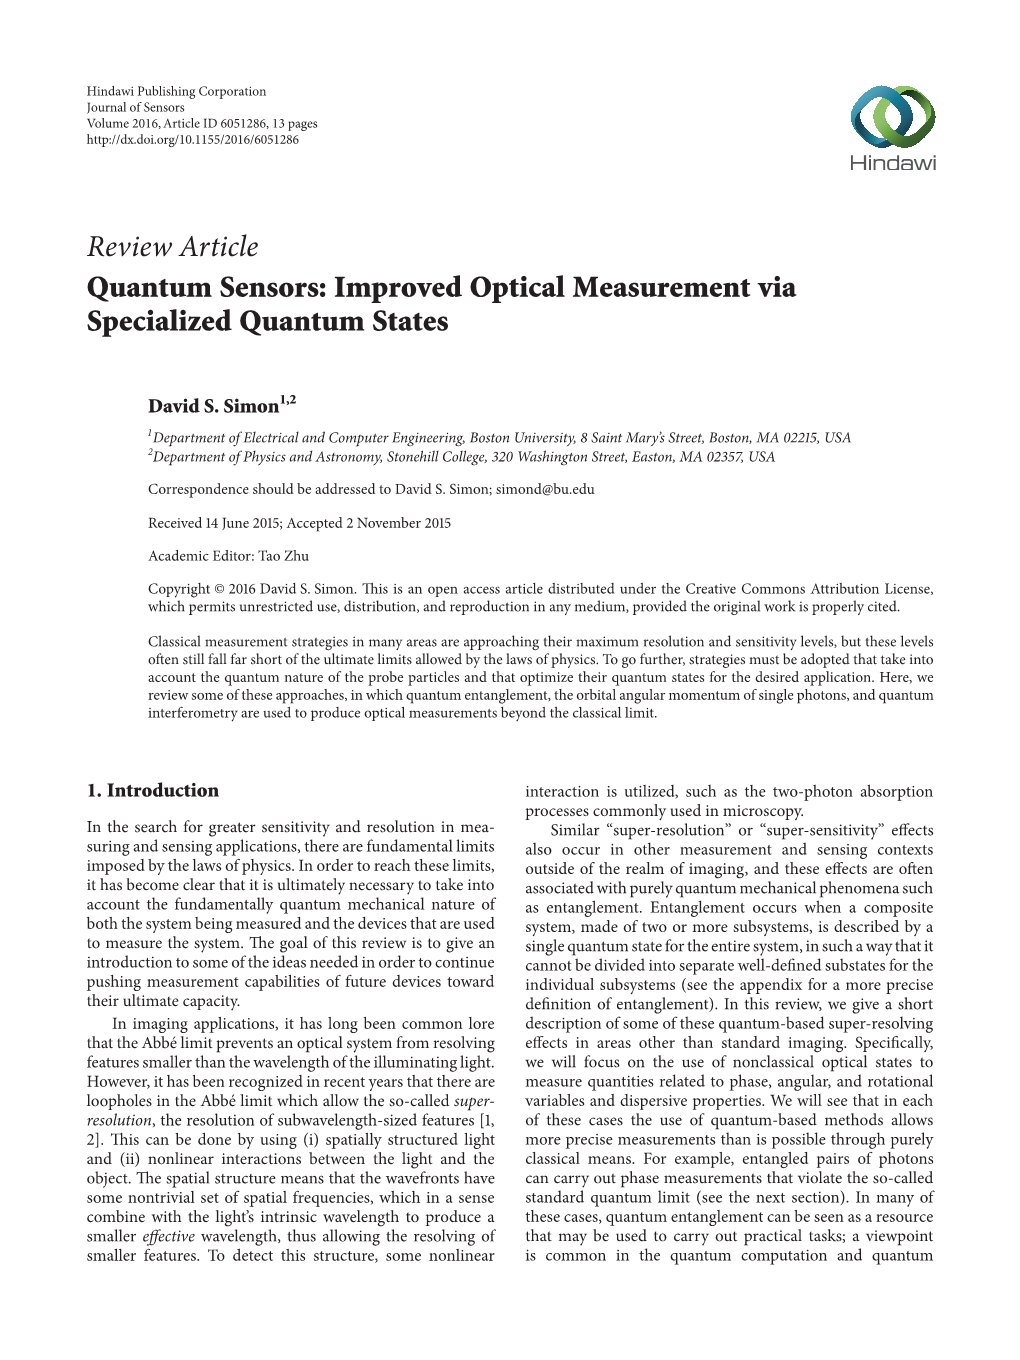 Review Article Quantum Sensors: Improved Optical Measurement Via Specialized Quantum States